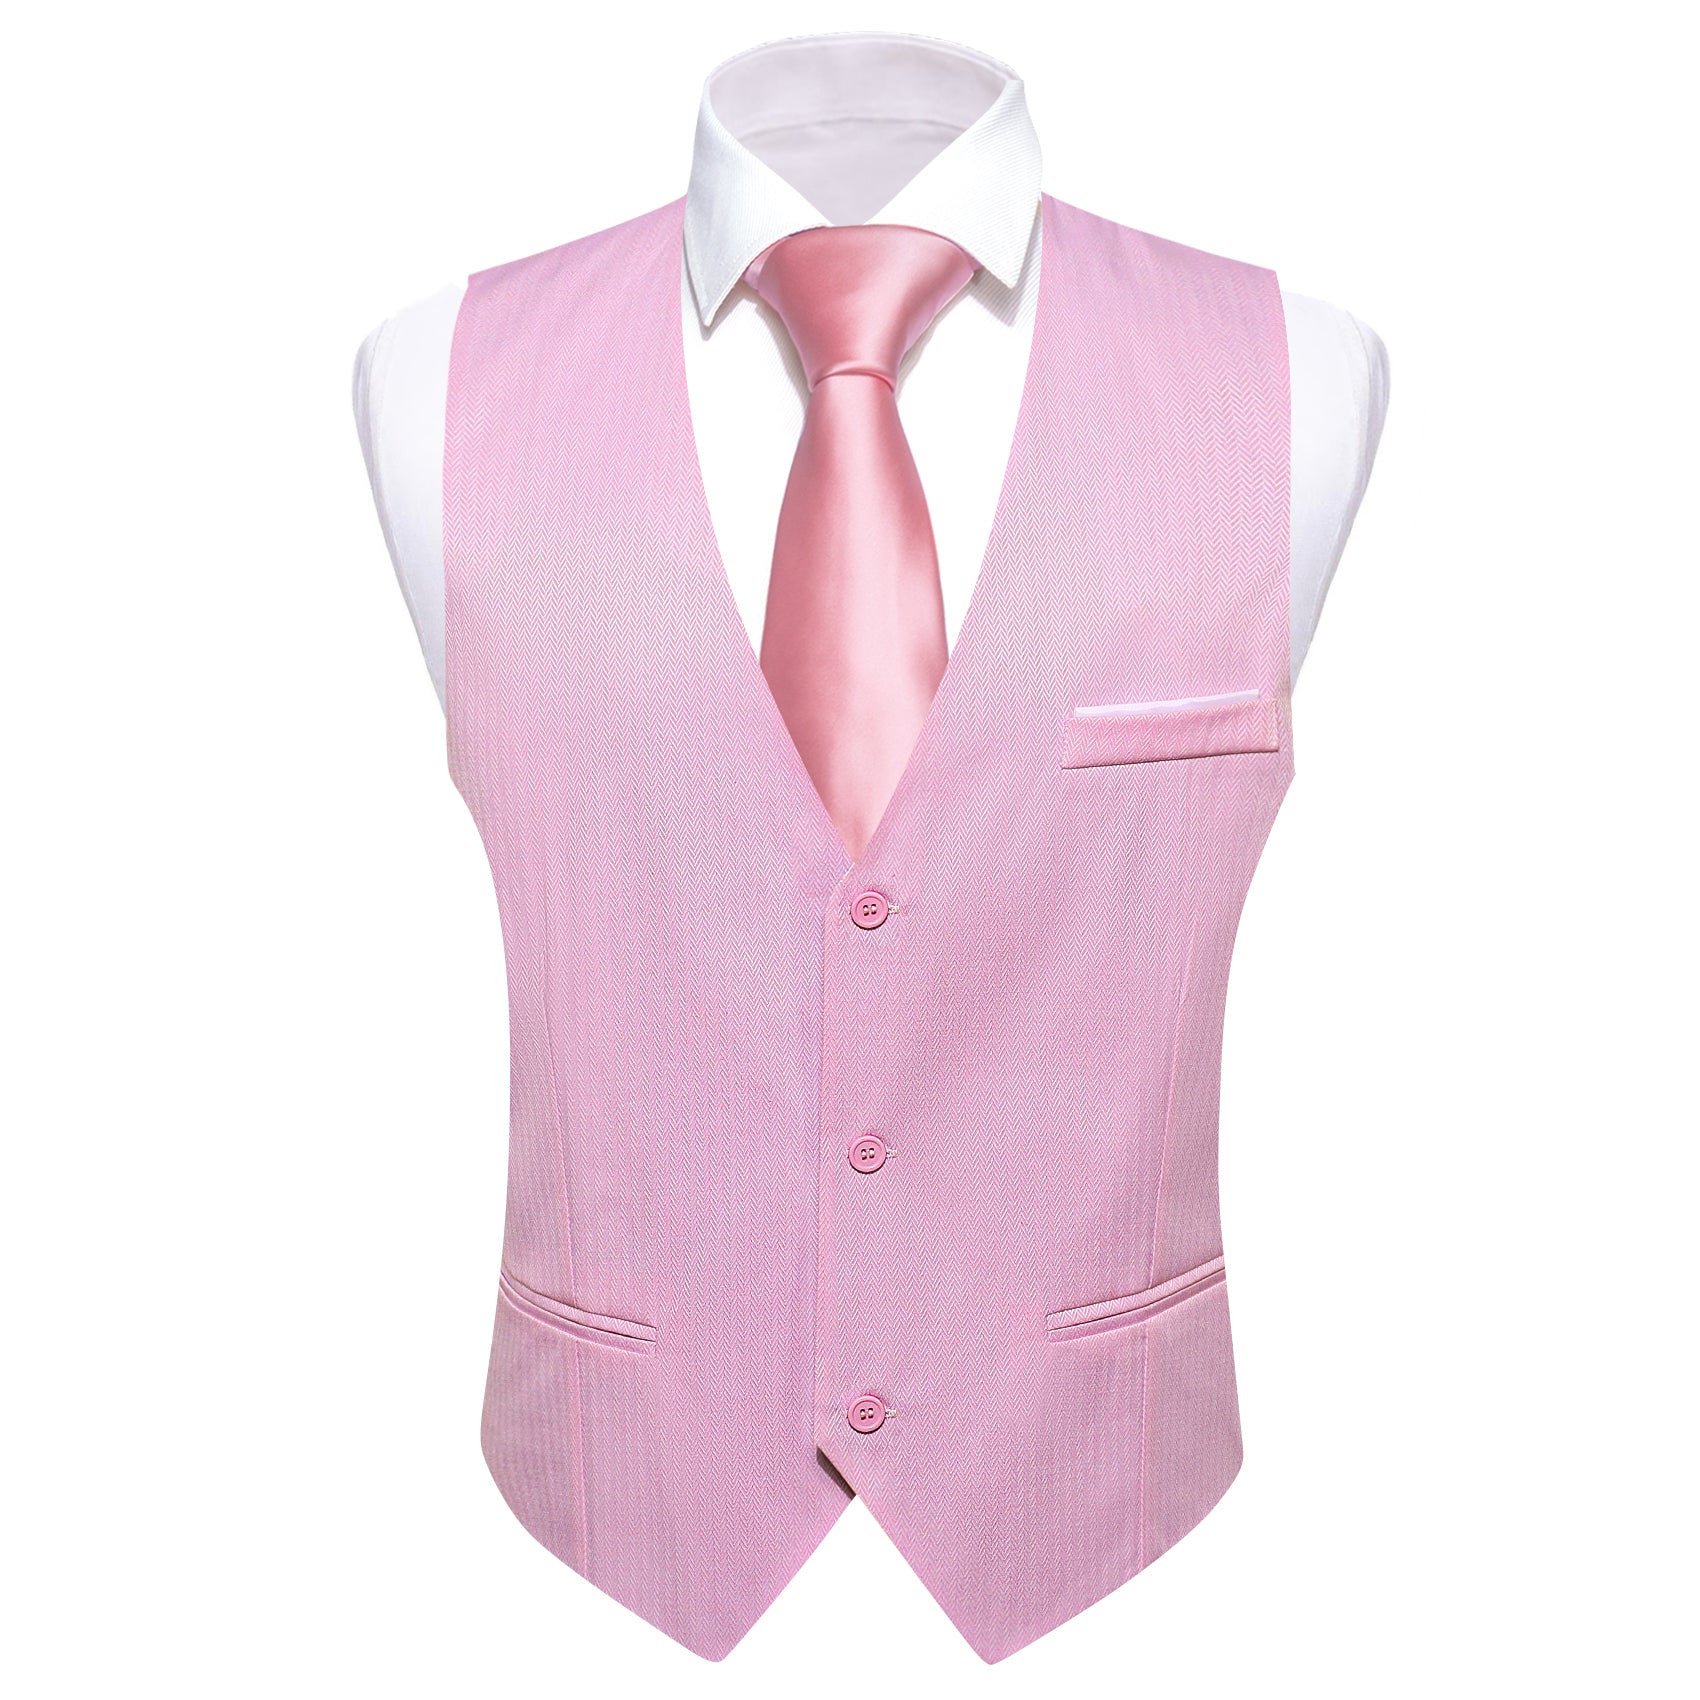 Men's Pink Solid Vest Suit for Business